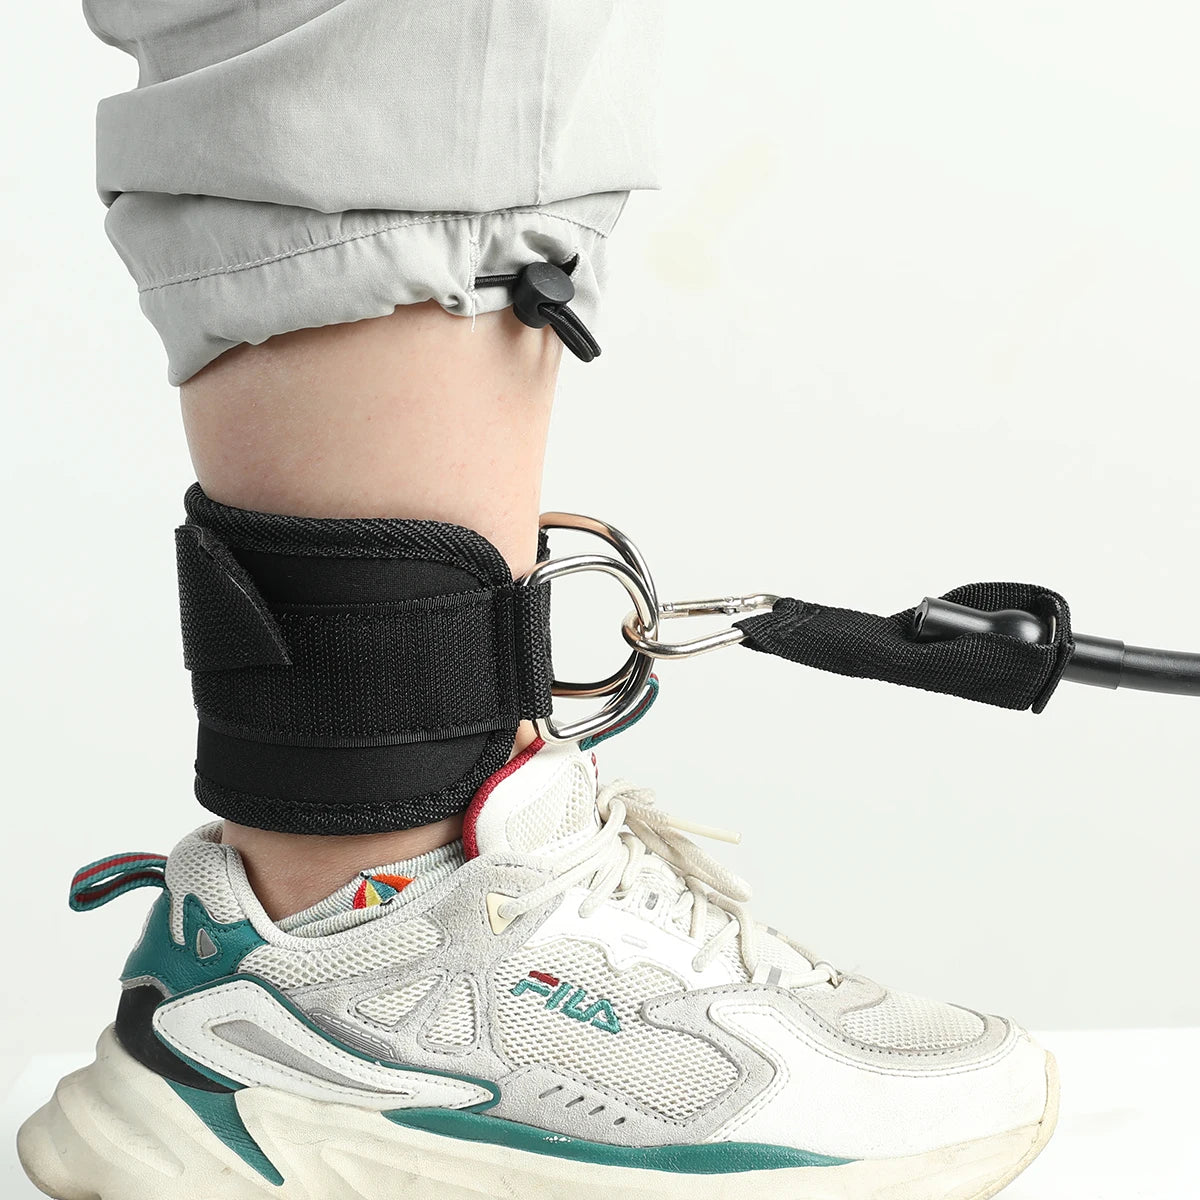 Adjustable Fitness Ankle Straps: Gym Leg Support